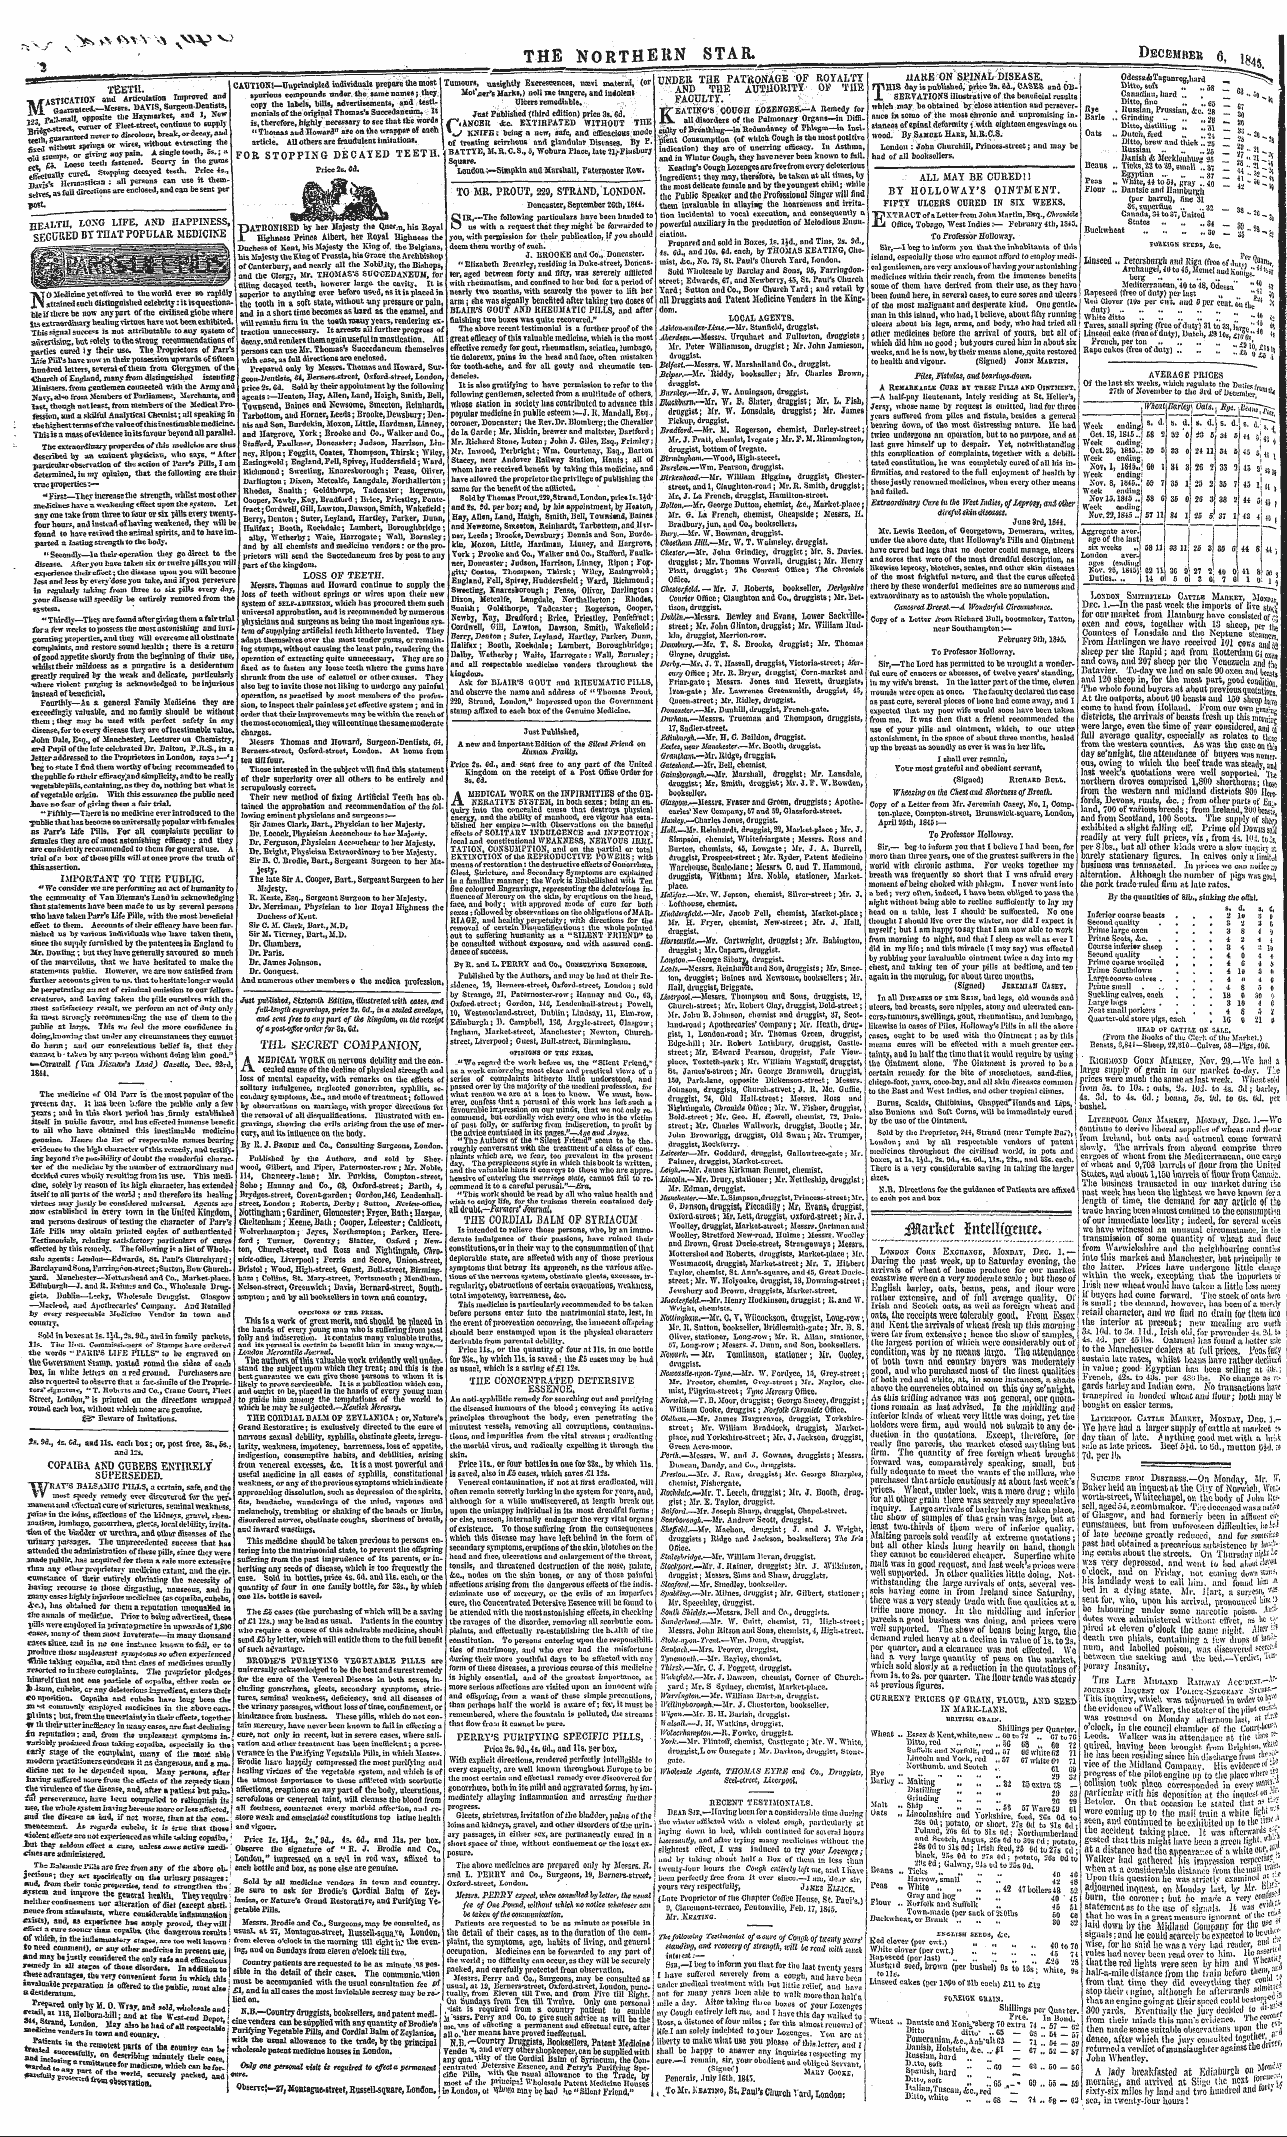 Northern Star (1837-1852): jS F Y, 3rd edition - Jjosdojj Smitiifielo Cattle Maniiet, Mo....